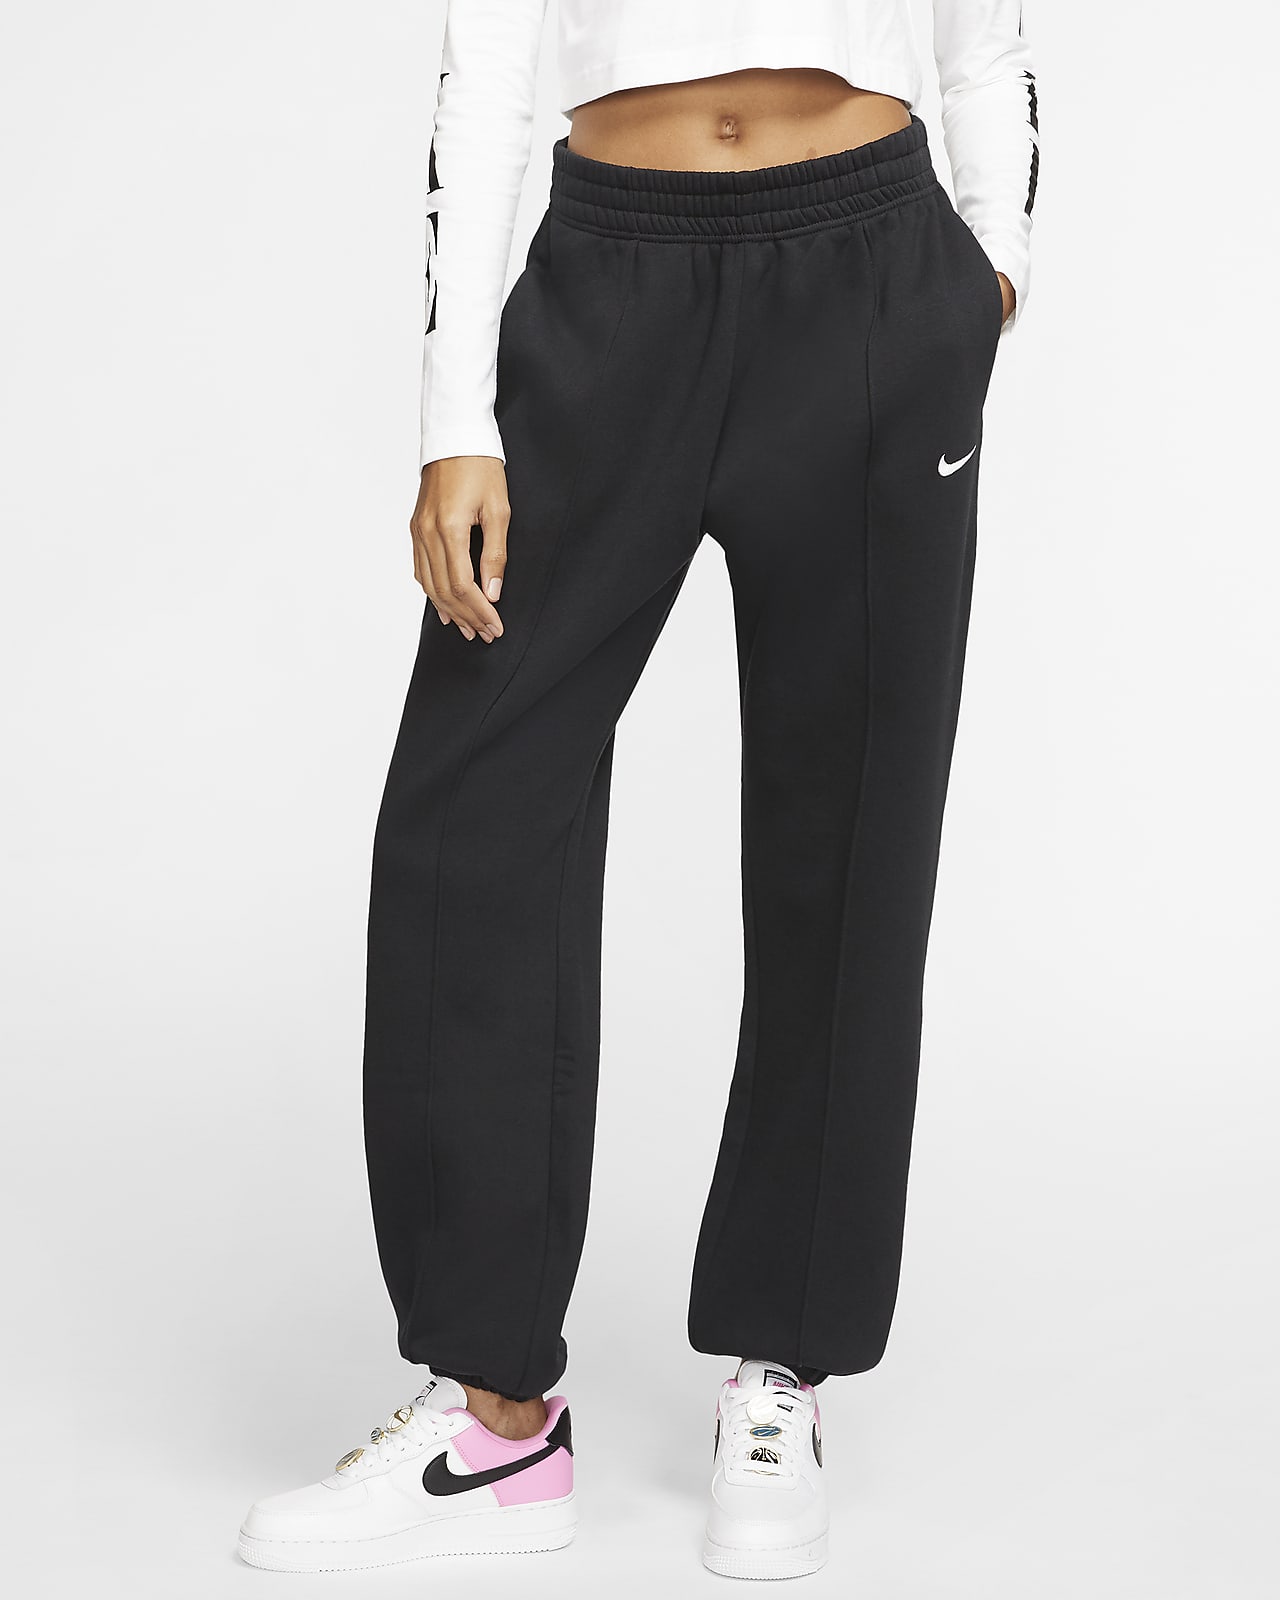 Nike Womens Air Jordan Sisterhood Flight Suit Jumpsuit CZ5572 010